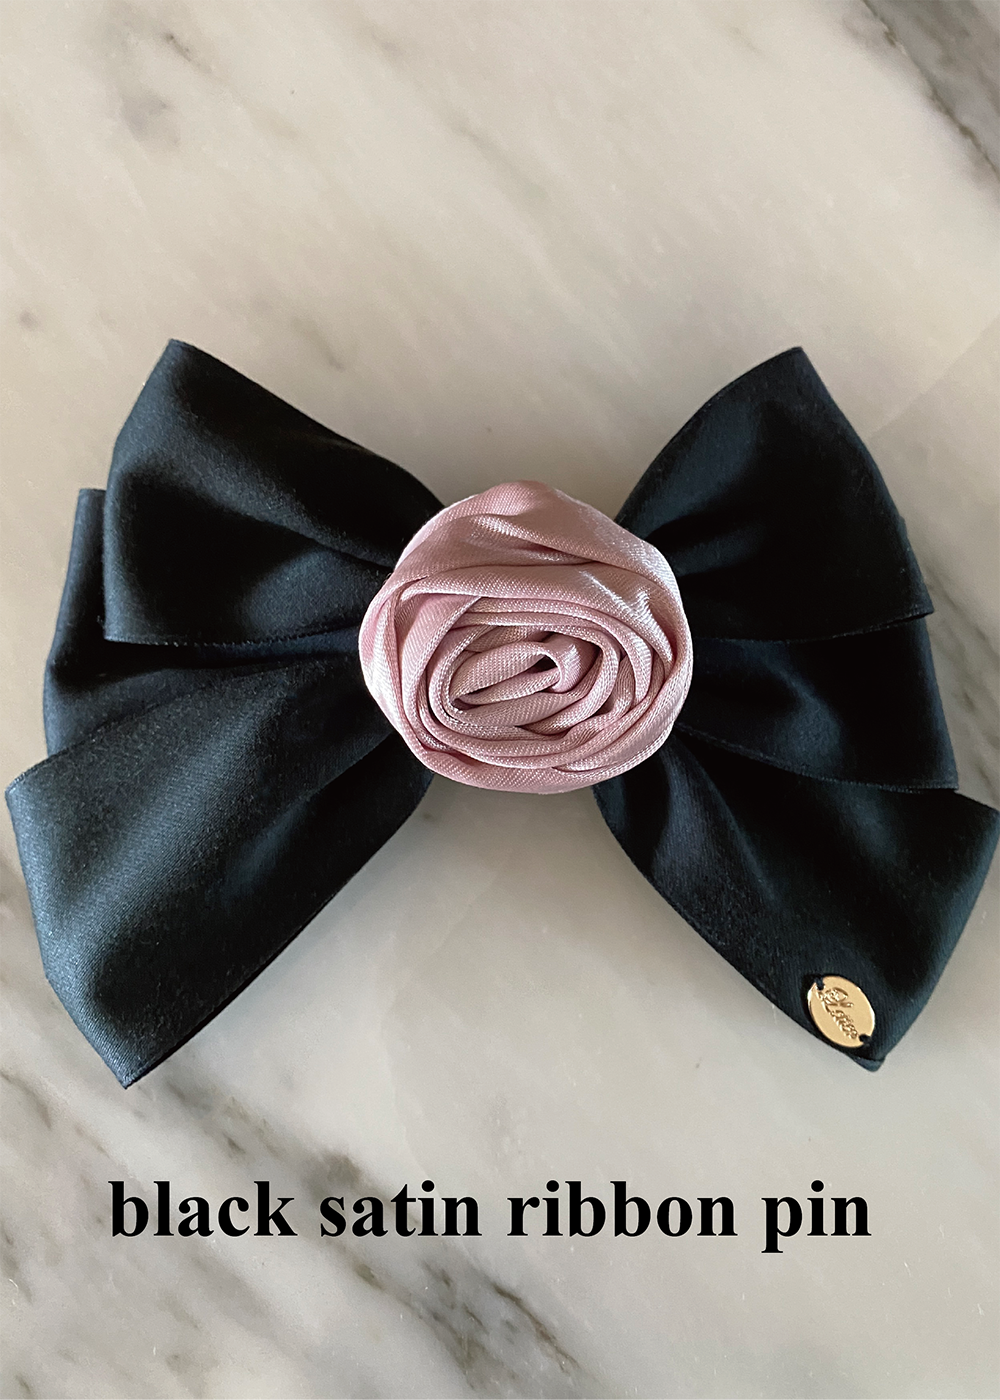 black satin ribbon pin 